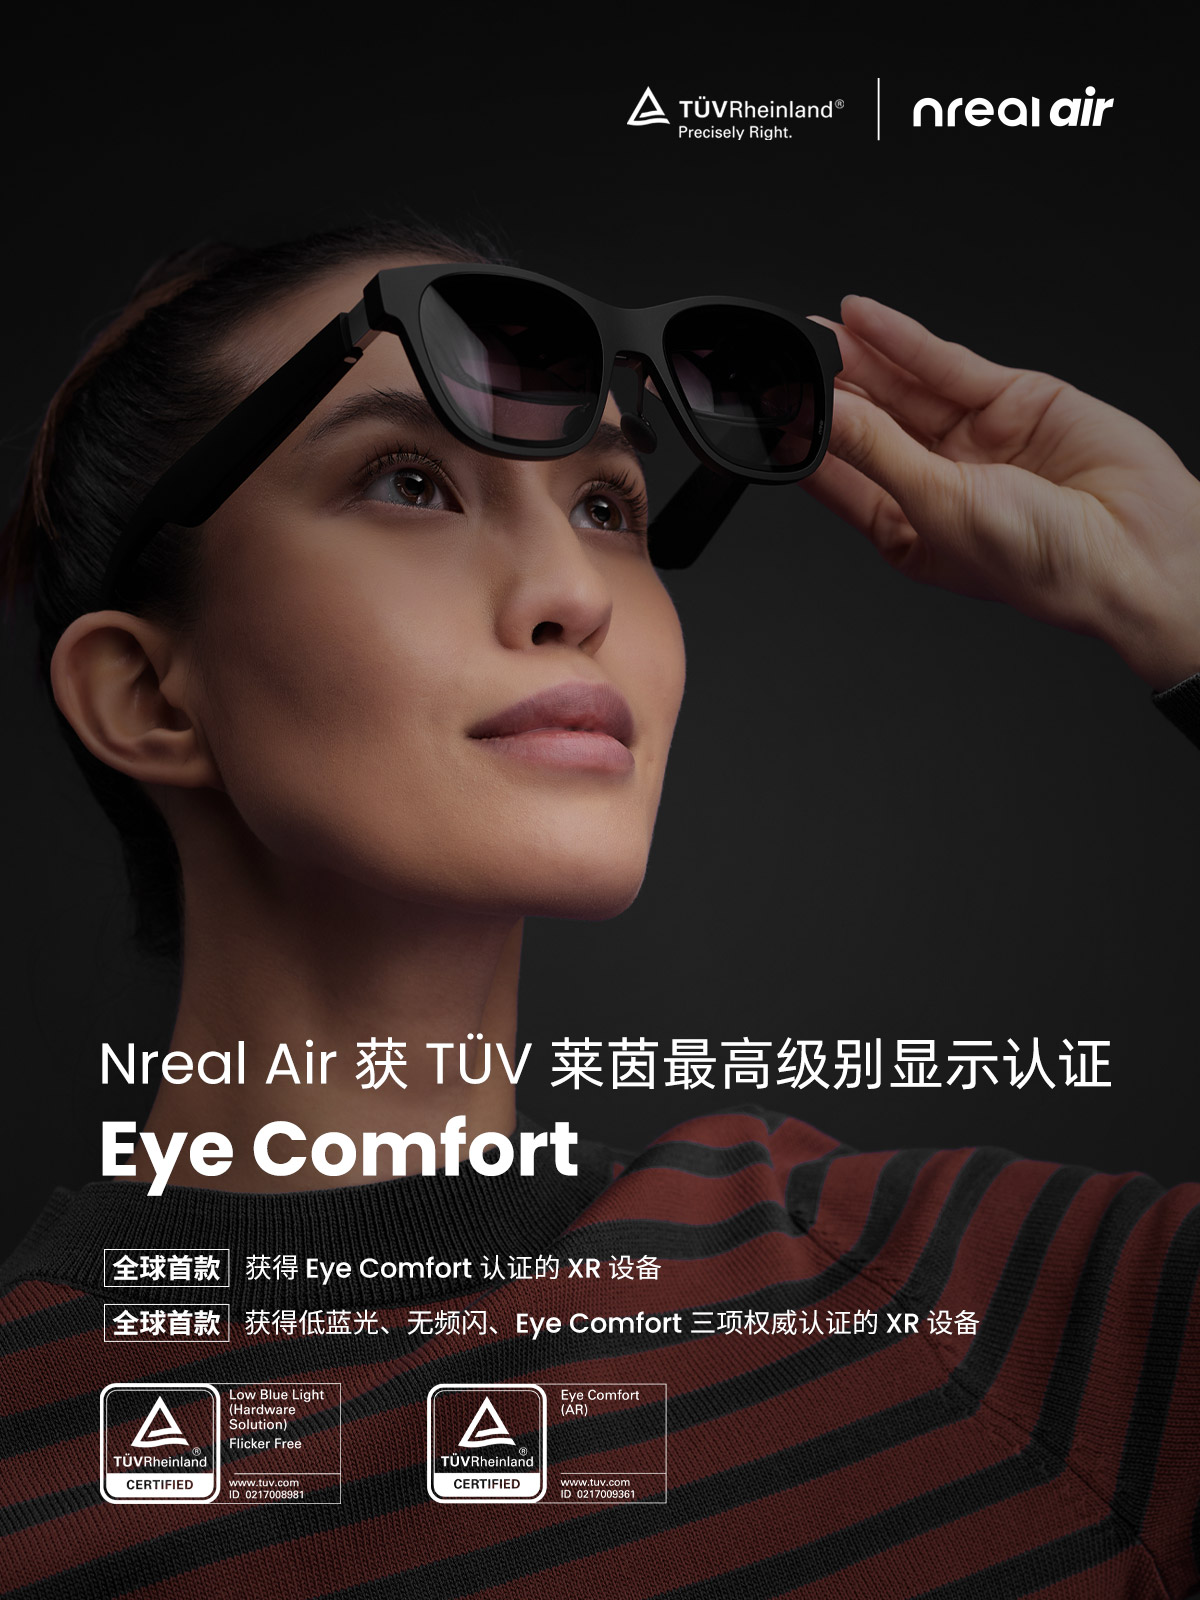 全球首款 Nreal AR眼镜获TUV莱茵AR领域最高级别显示认证Eye Comfort（AR）